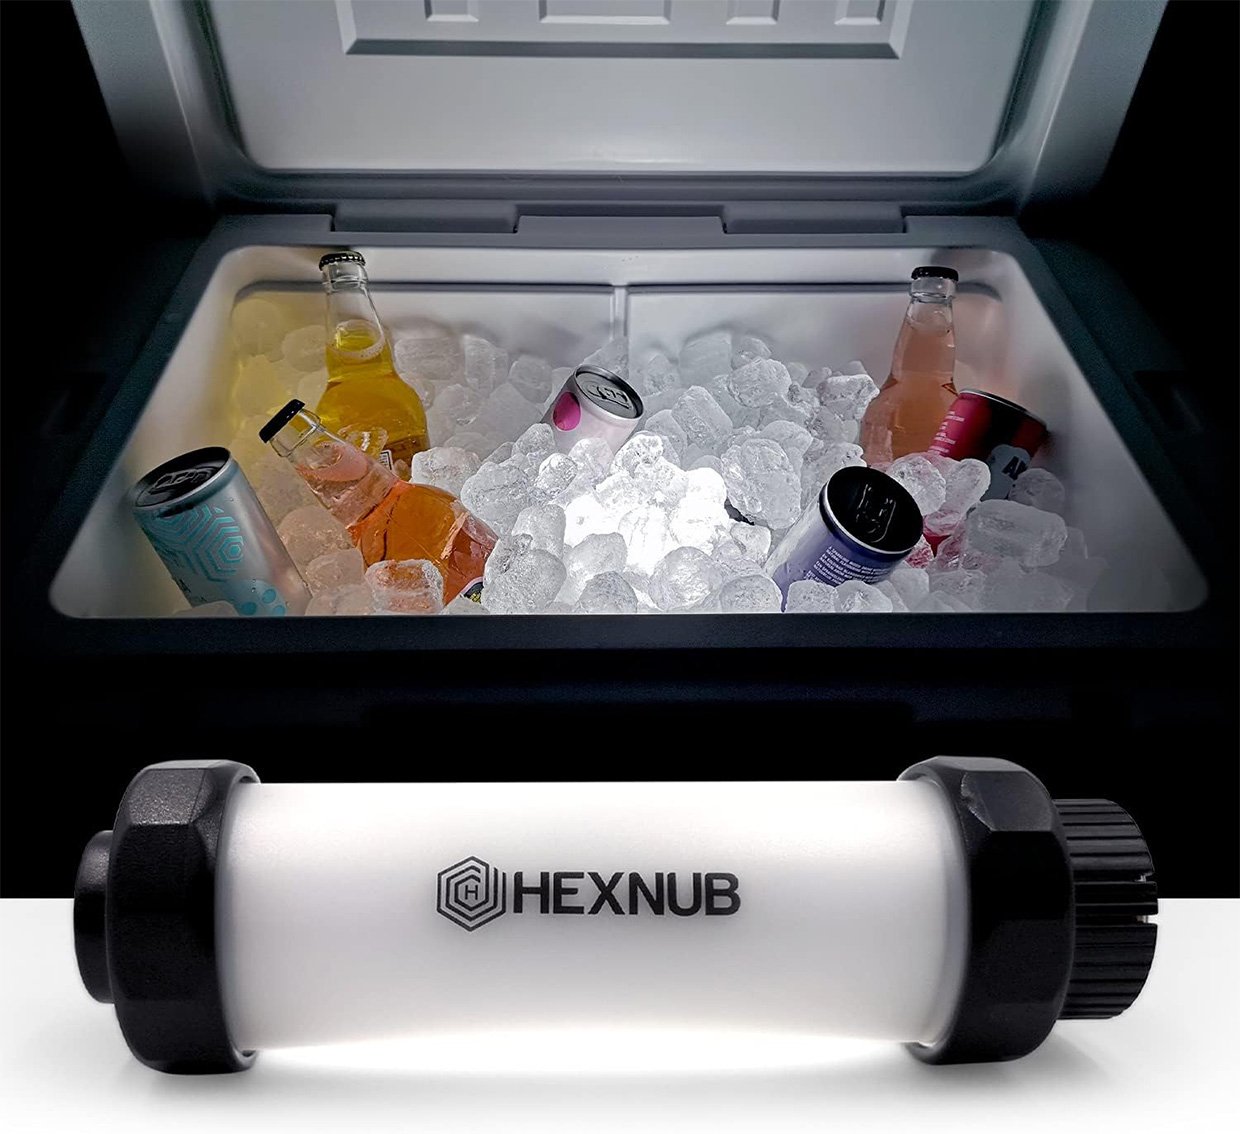 Hexnub Cooler Box Light